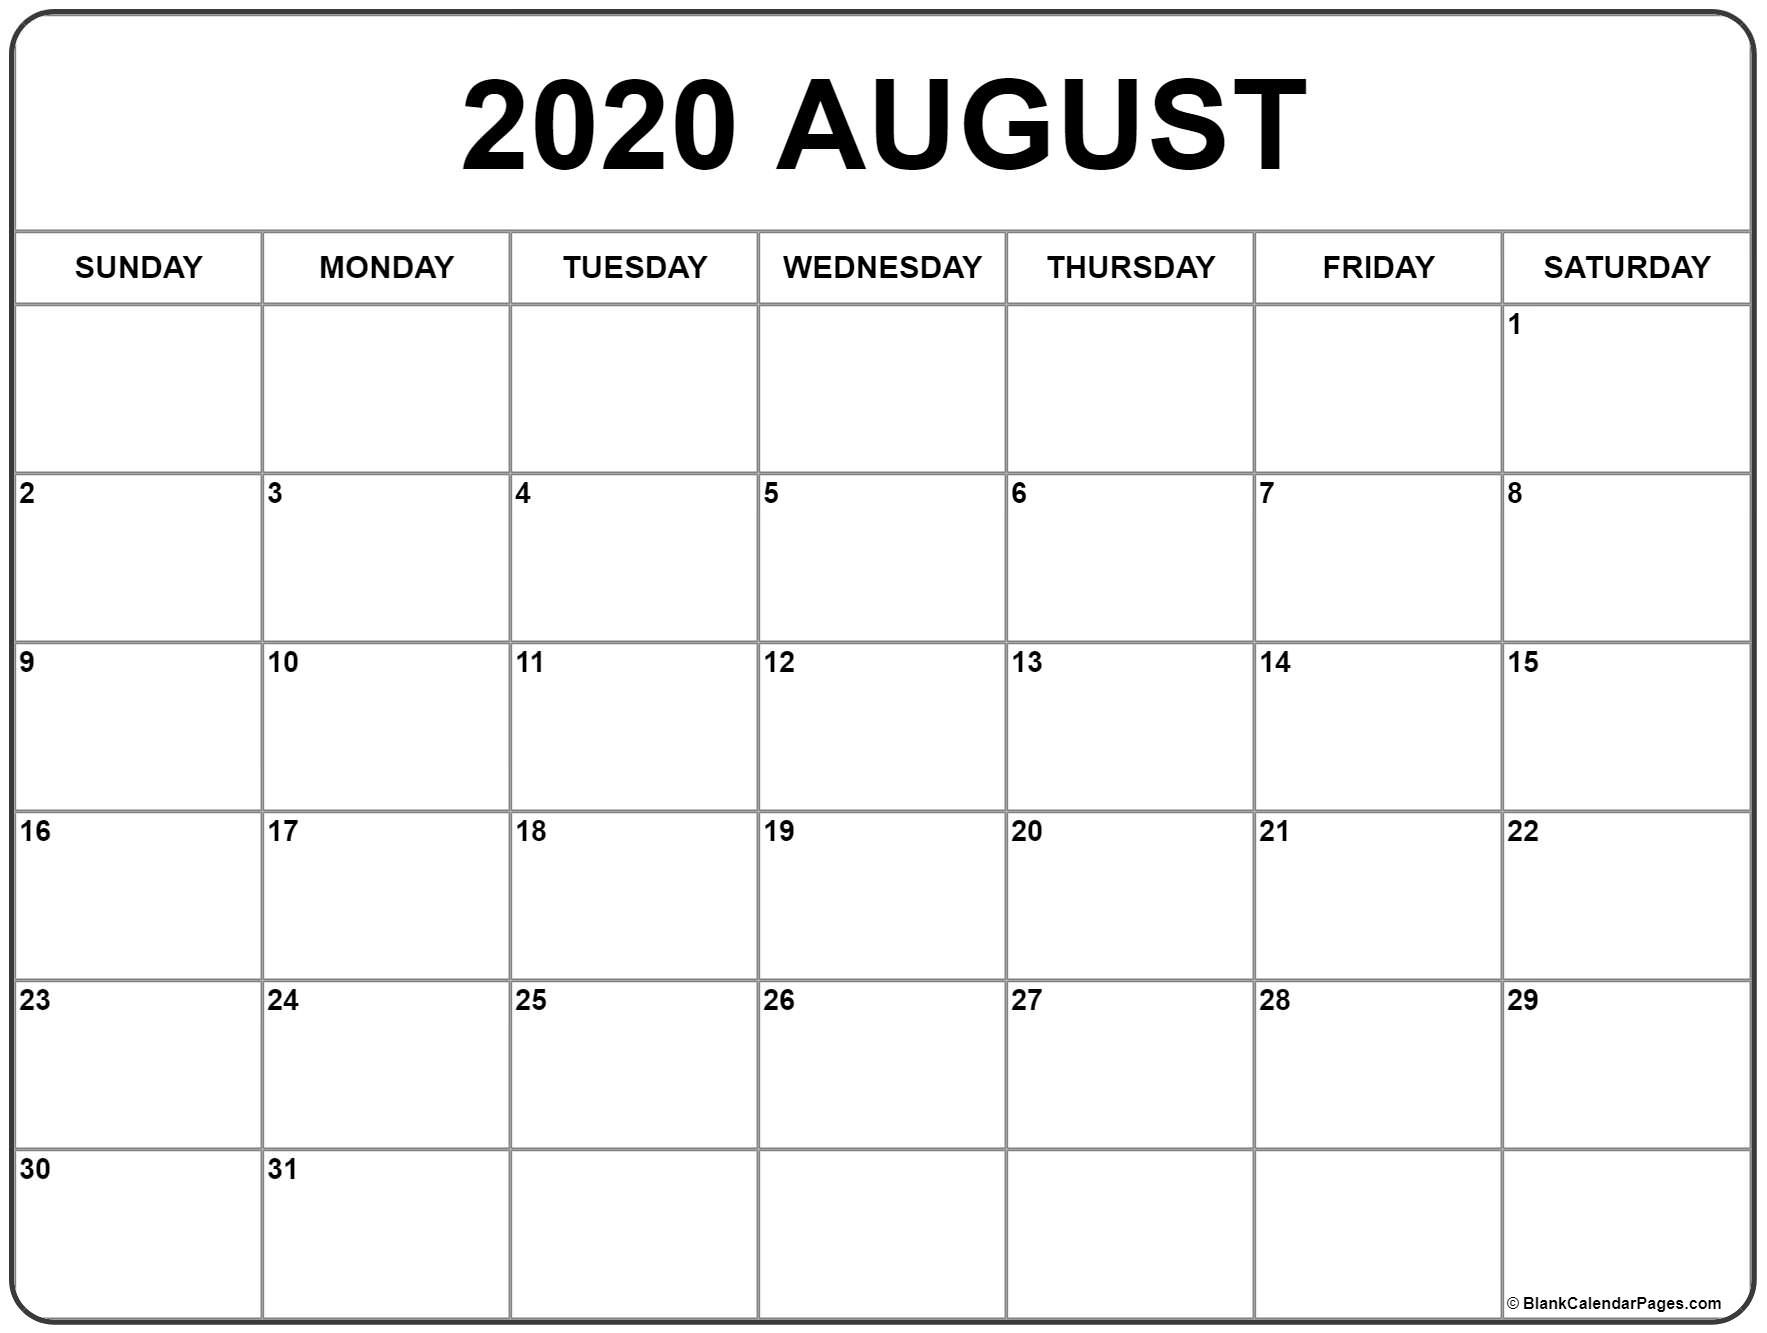 August 2020 Calendar | Free Printable Monthly Calendars-August 2020 Colorful Calendar Template